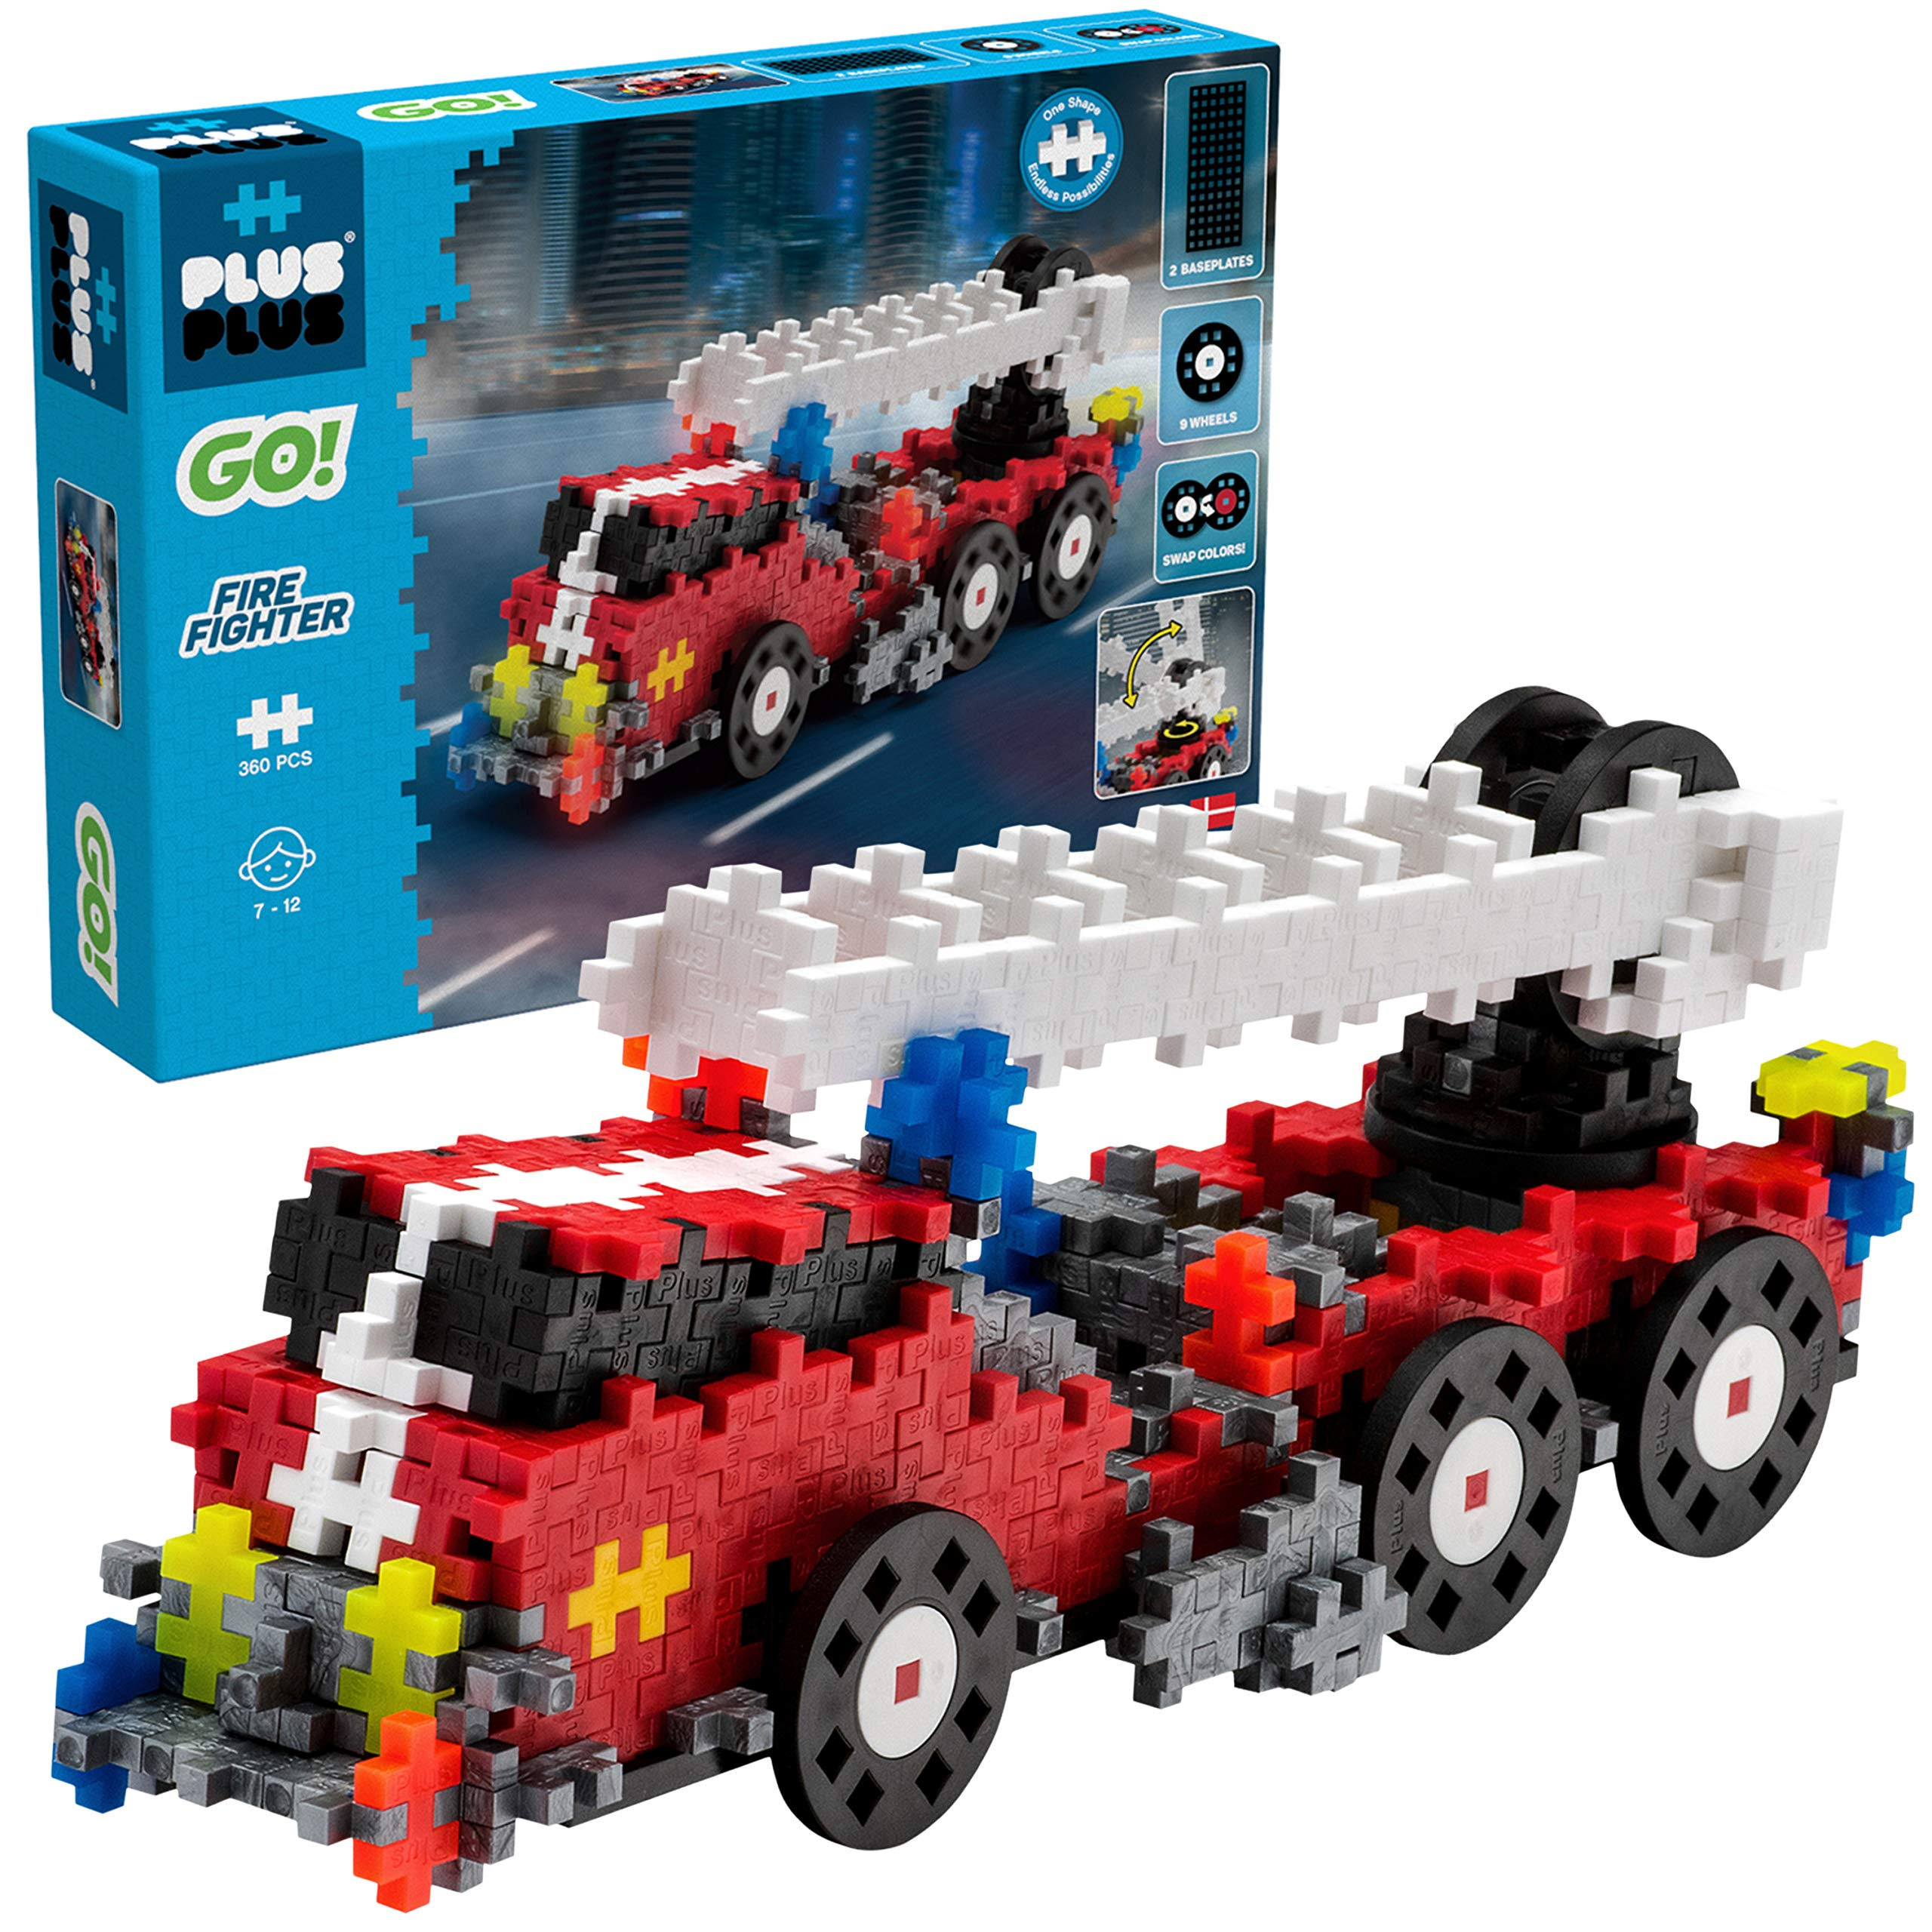 Plus Plus - Go! Fire Fighter Truck - 360 Pieces - Construction Building Stem / Steam Toy, Interlocking Mini Puzzle Blocks for Kids